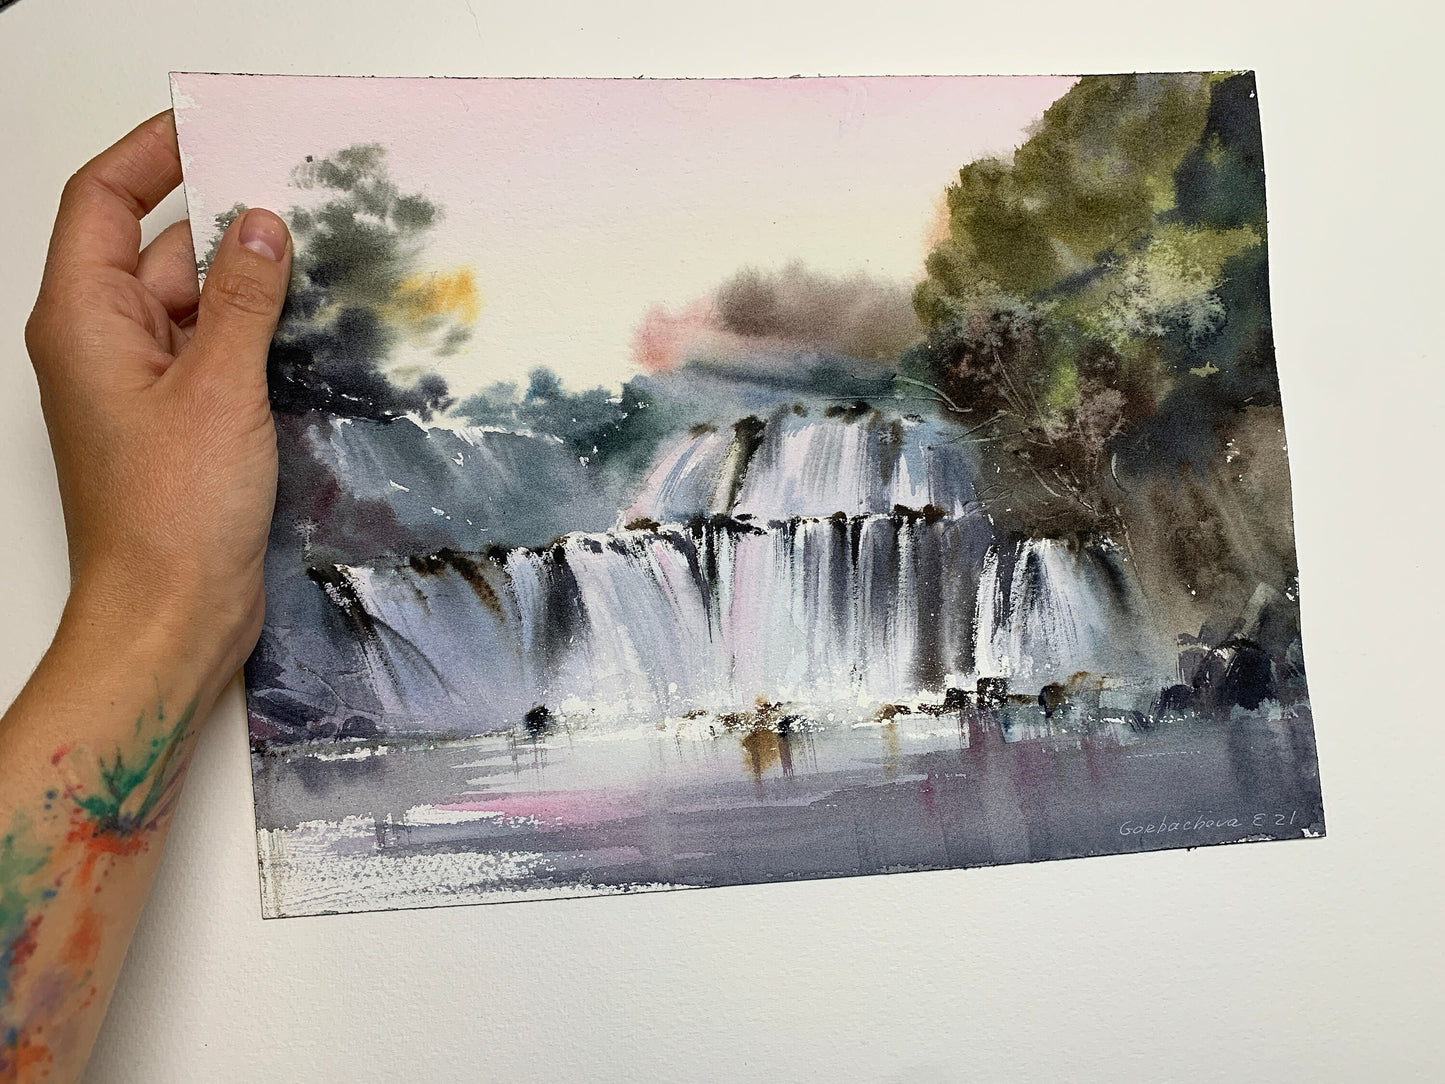 Waterfall Painting Original, Watercolor Art, Tropical Landscape Artwork, Green Forest, Nature Art Decor, Gift